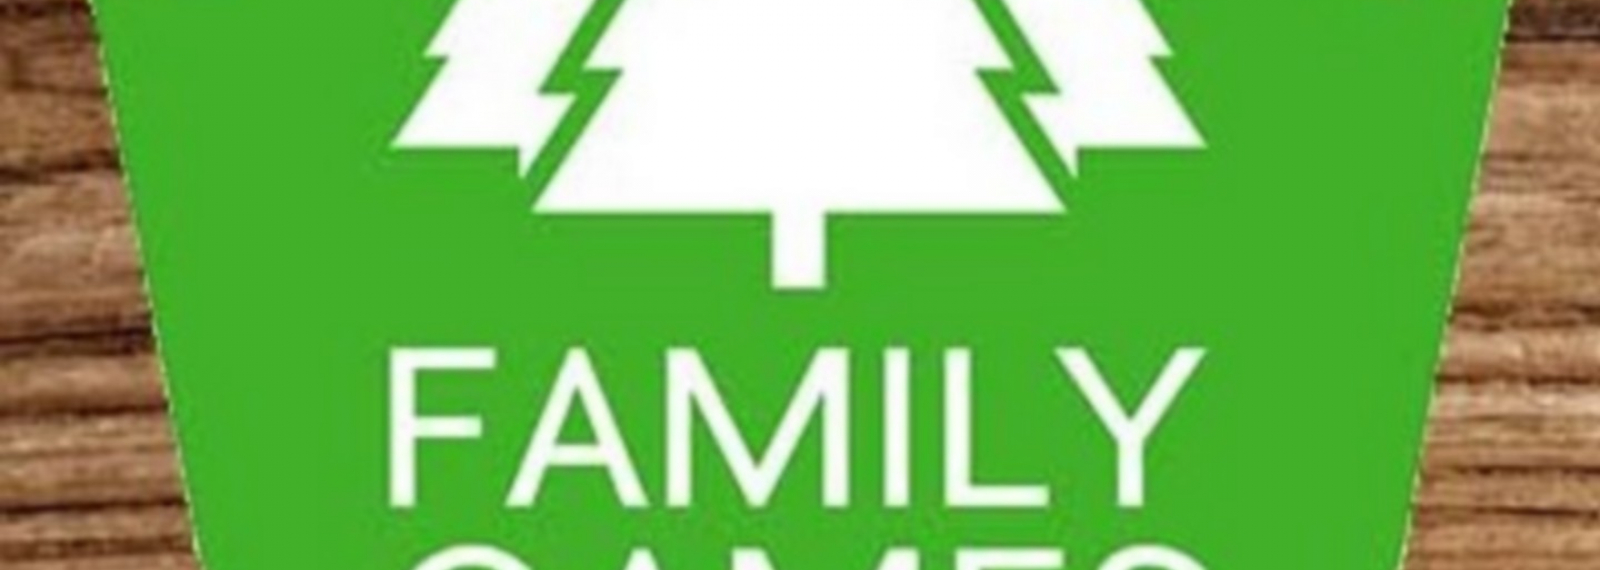 Family Games - Paint Ball et laser game